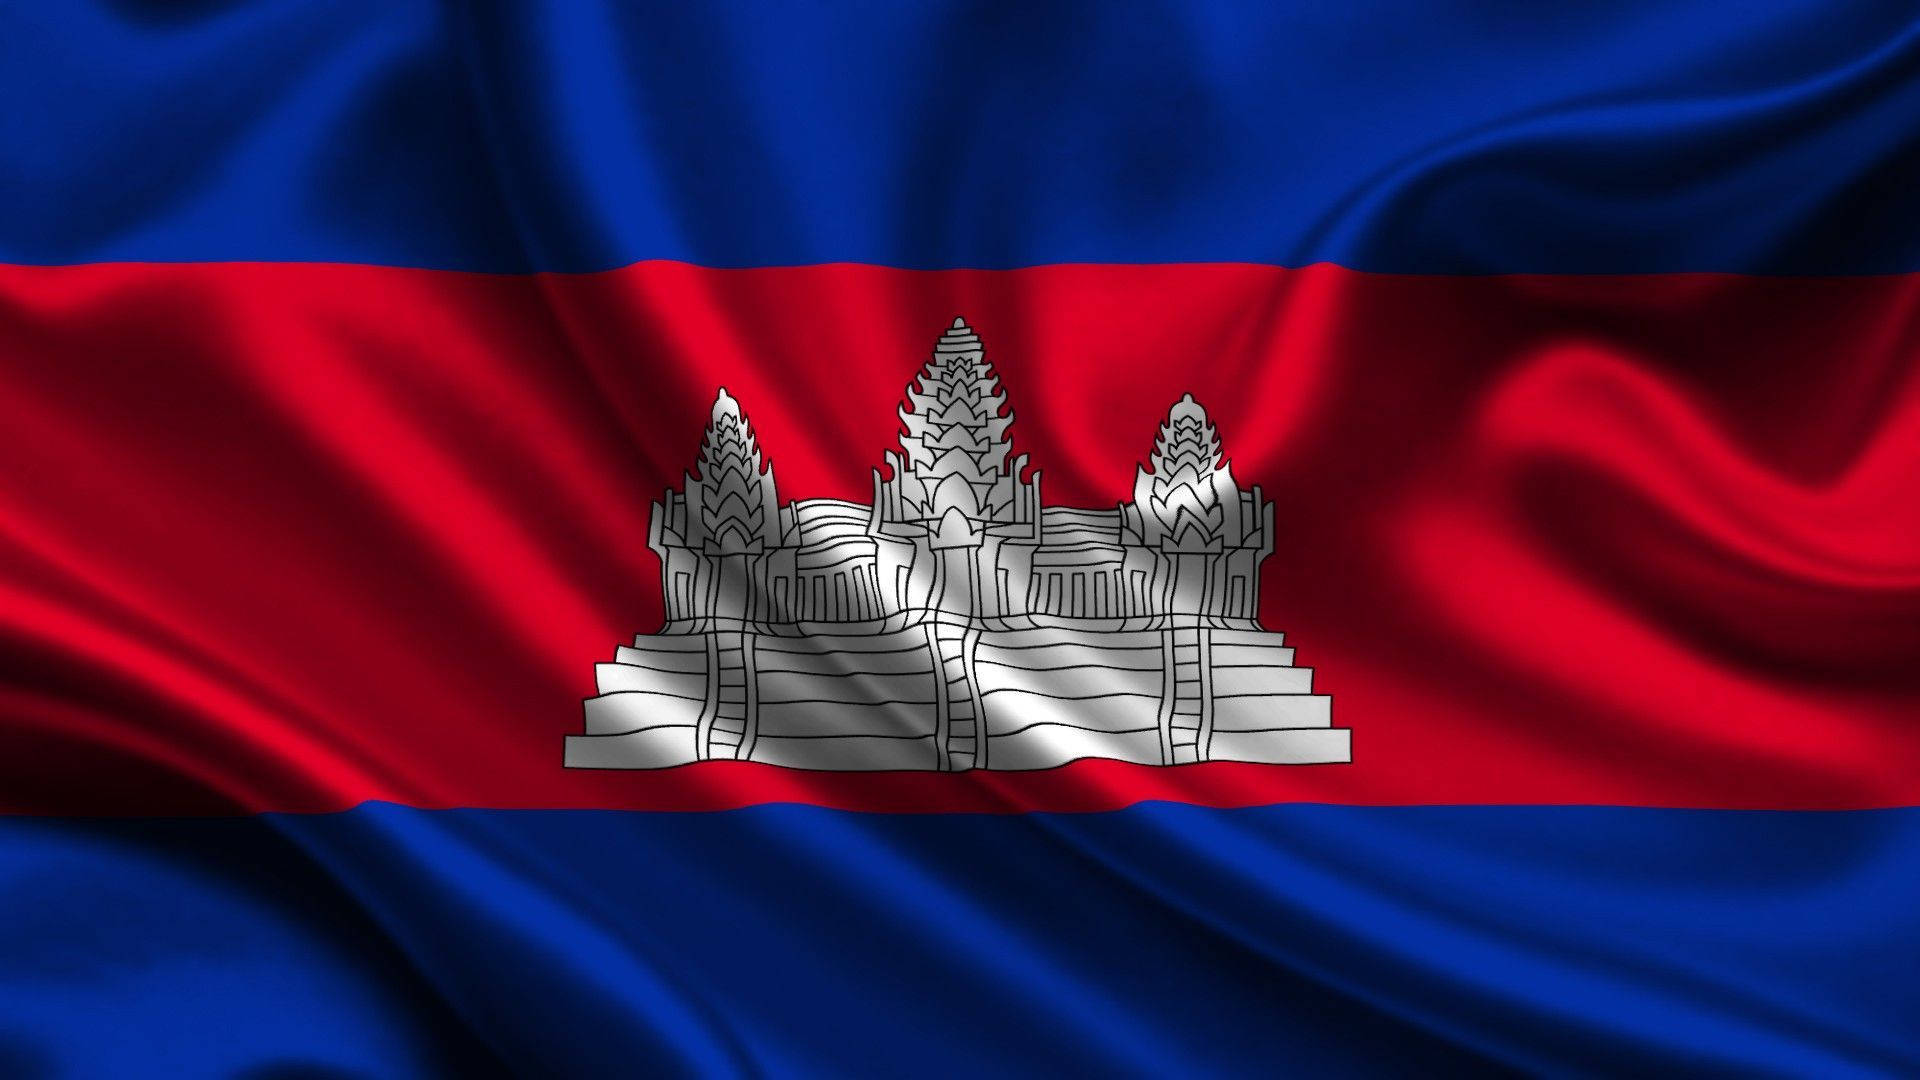 Caption: Vibrant National Flag Of Cambodia